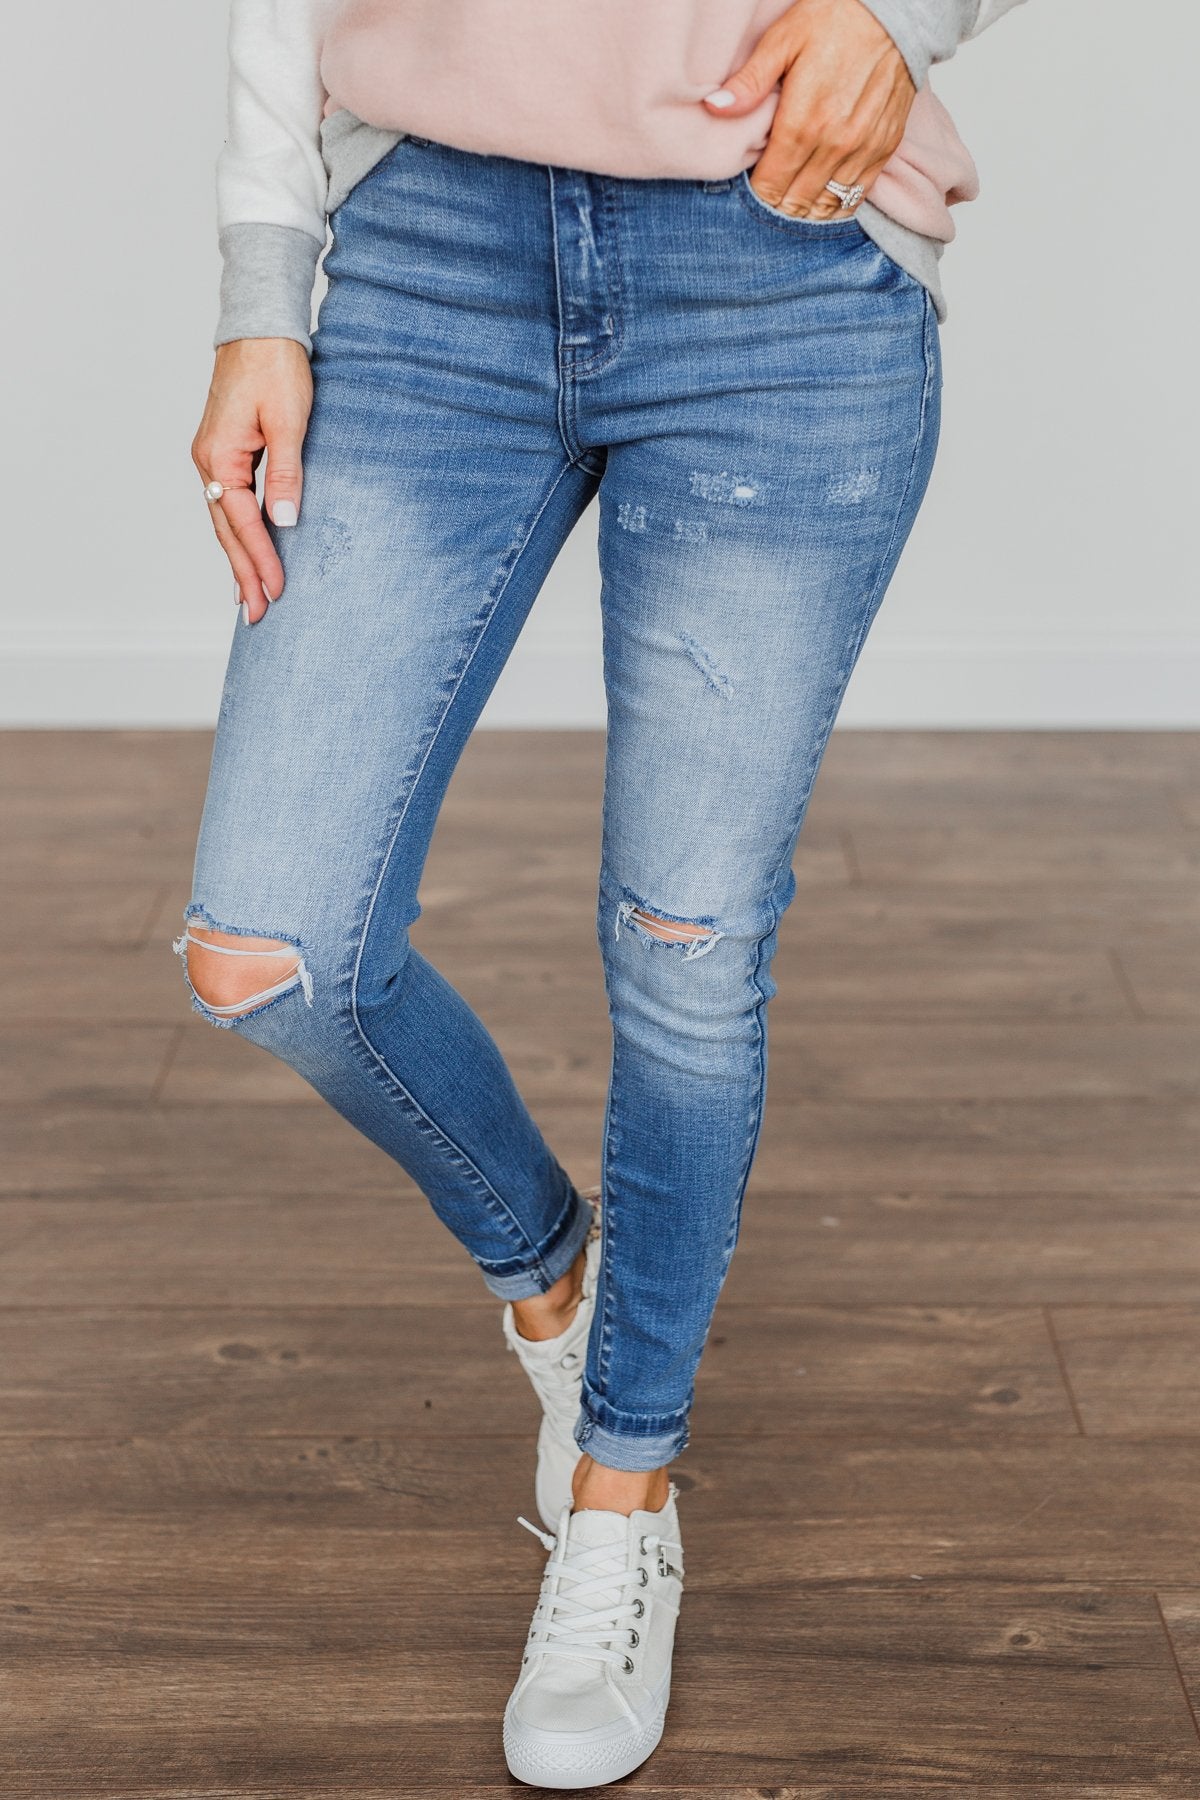 KanCan High-Rise Skinny Jeans- Alexa Wash